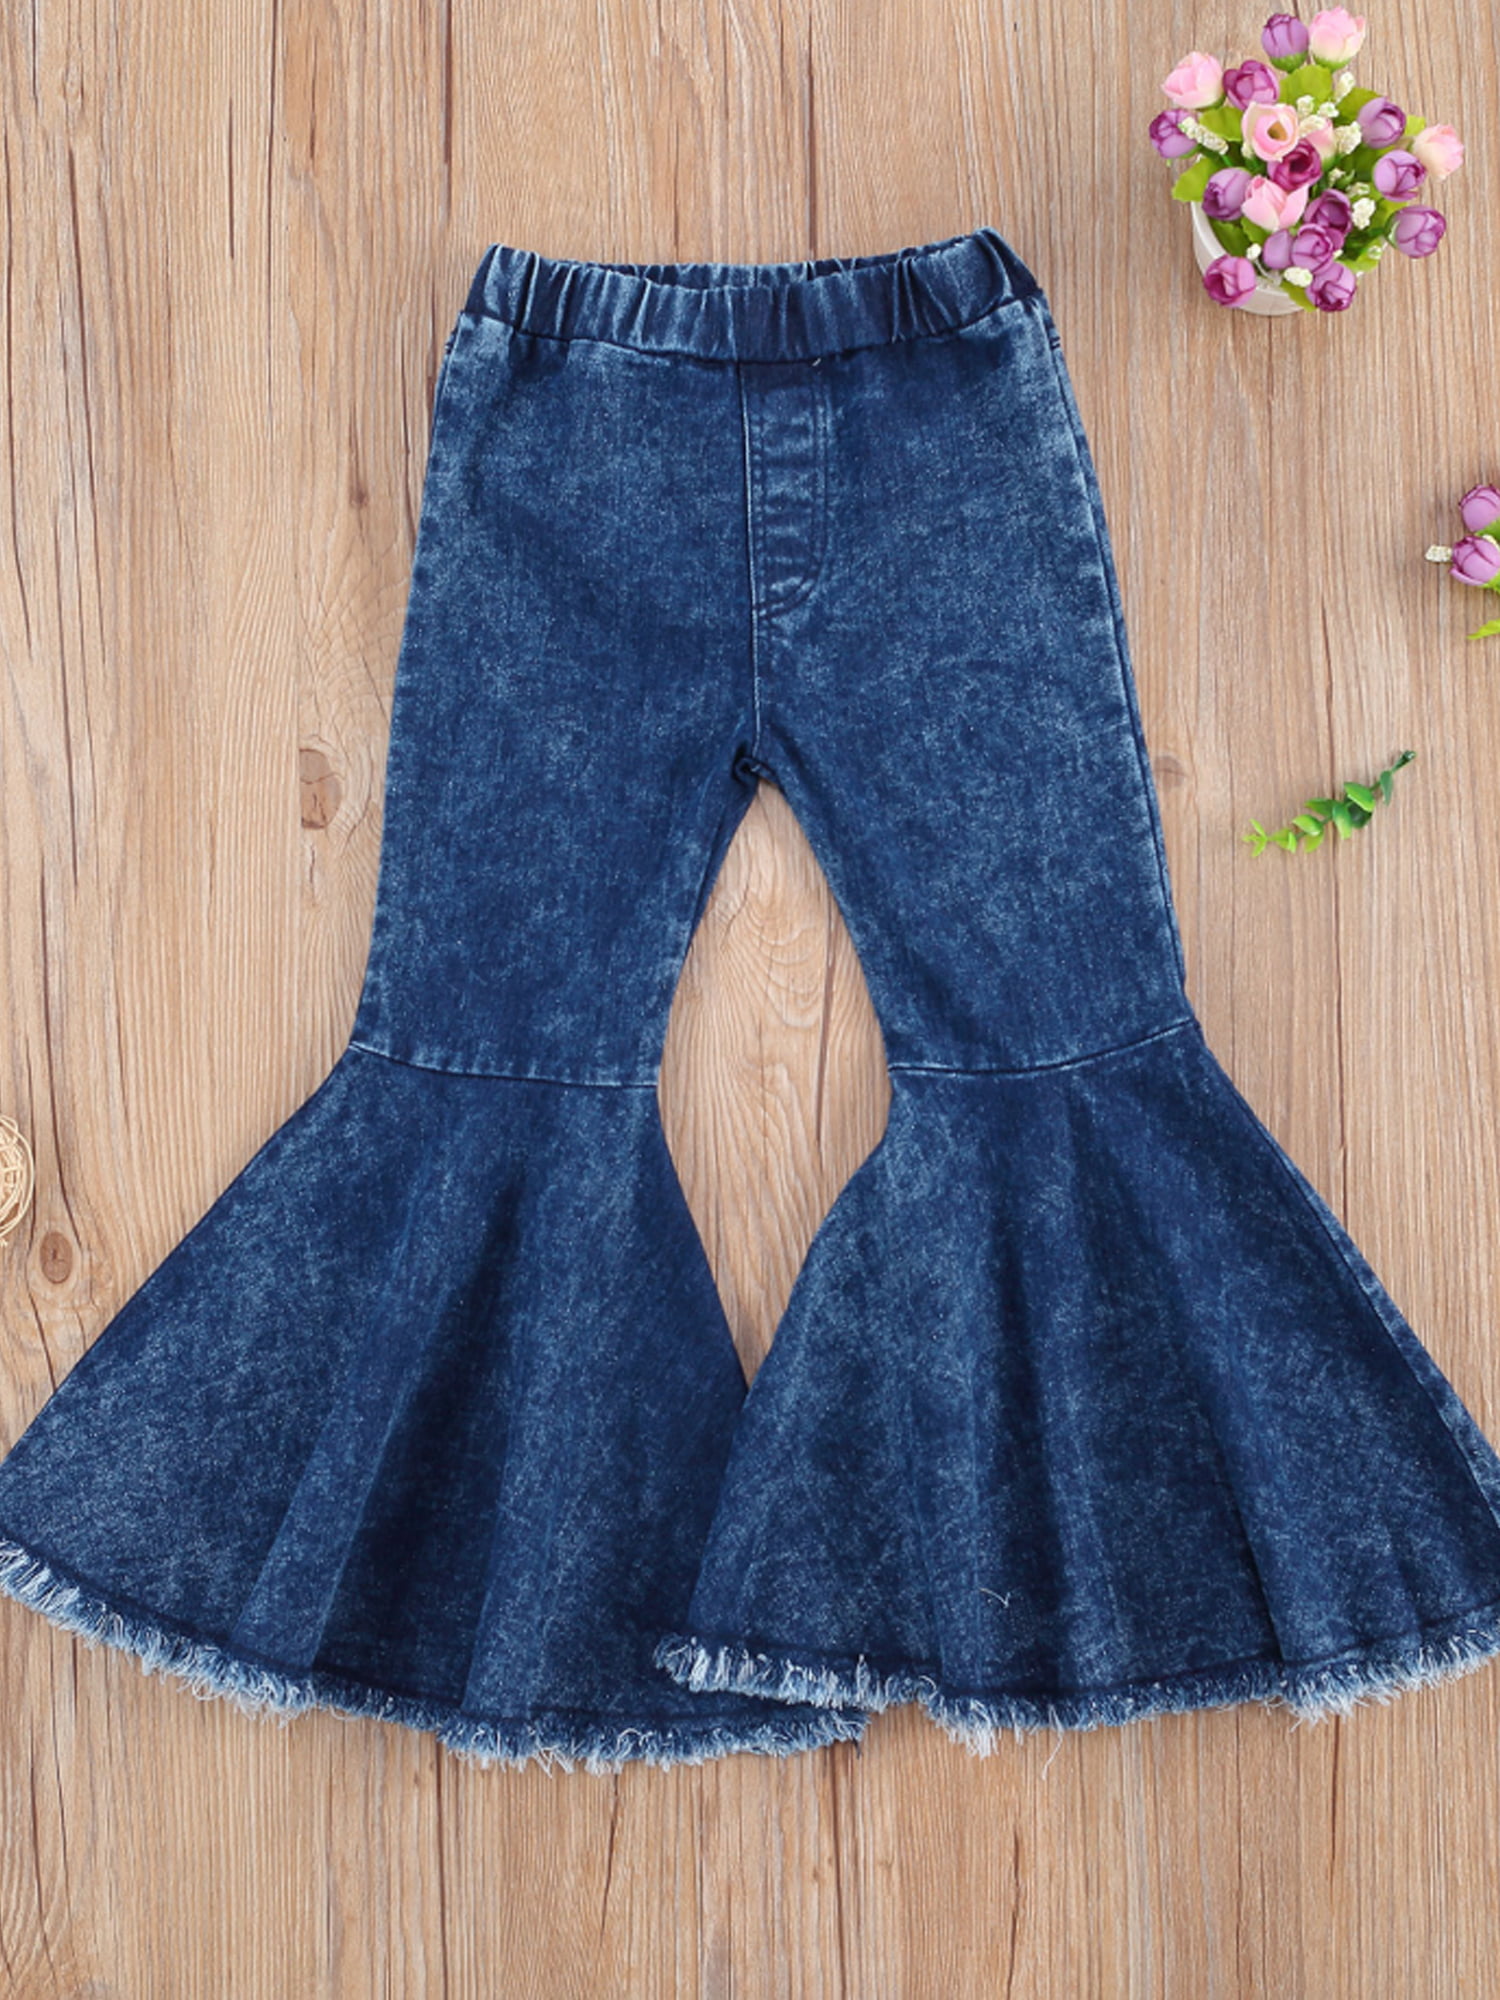 Baby Girls Little Kids Suspender Overall Flared Denim Jeans Jumpsuit Bell Elastic Blue Pants 